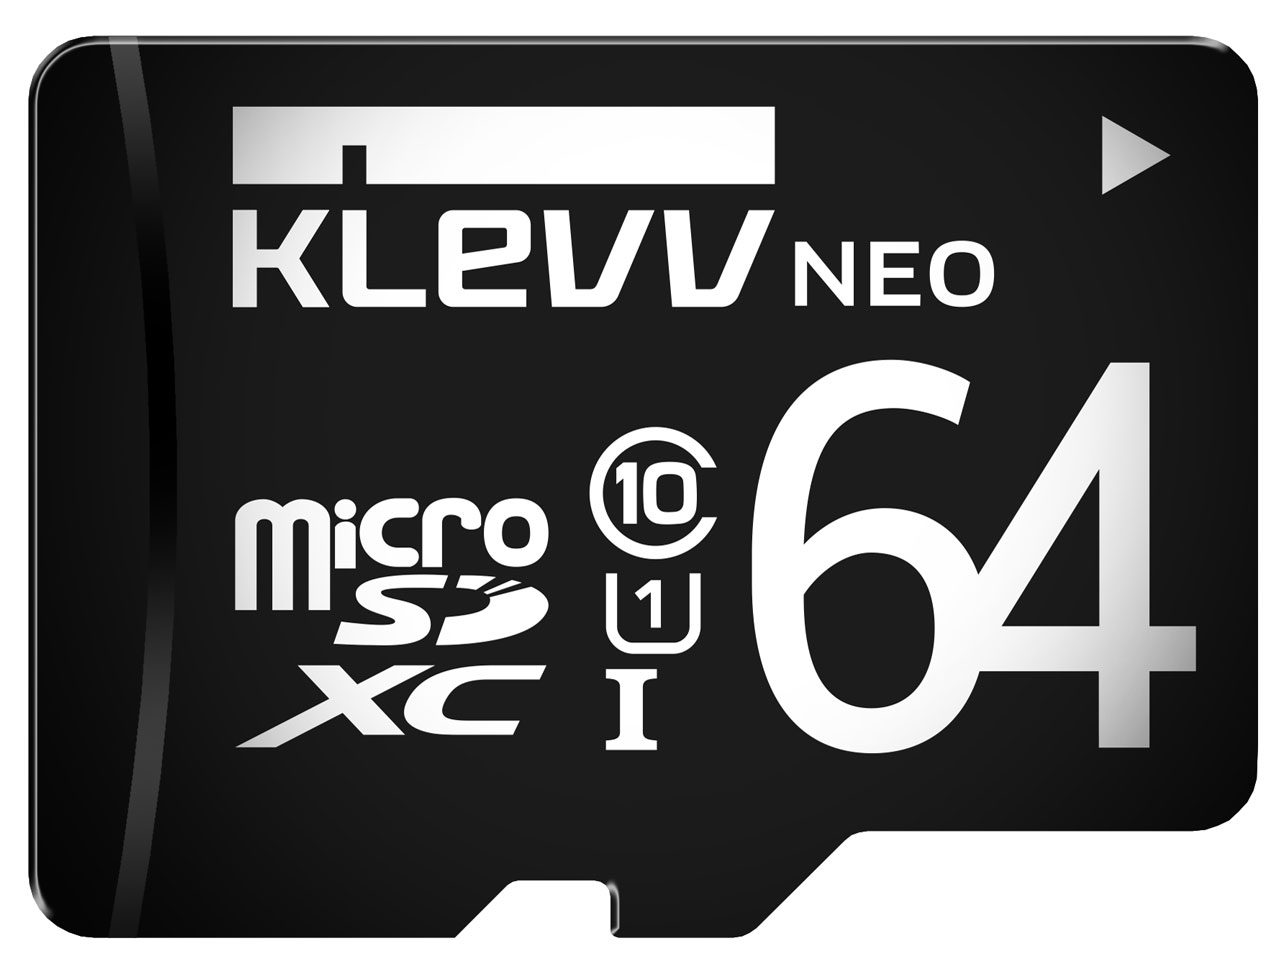 KLEVV NEO U064GUC1U18-D [64GB]